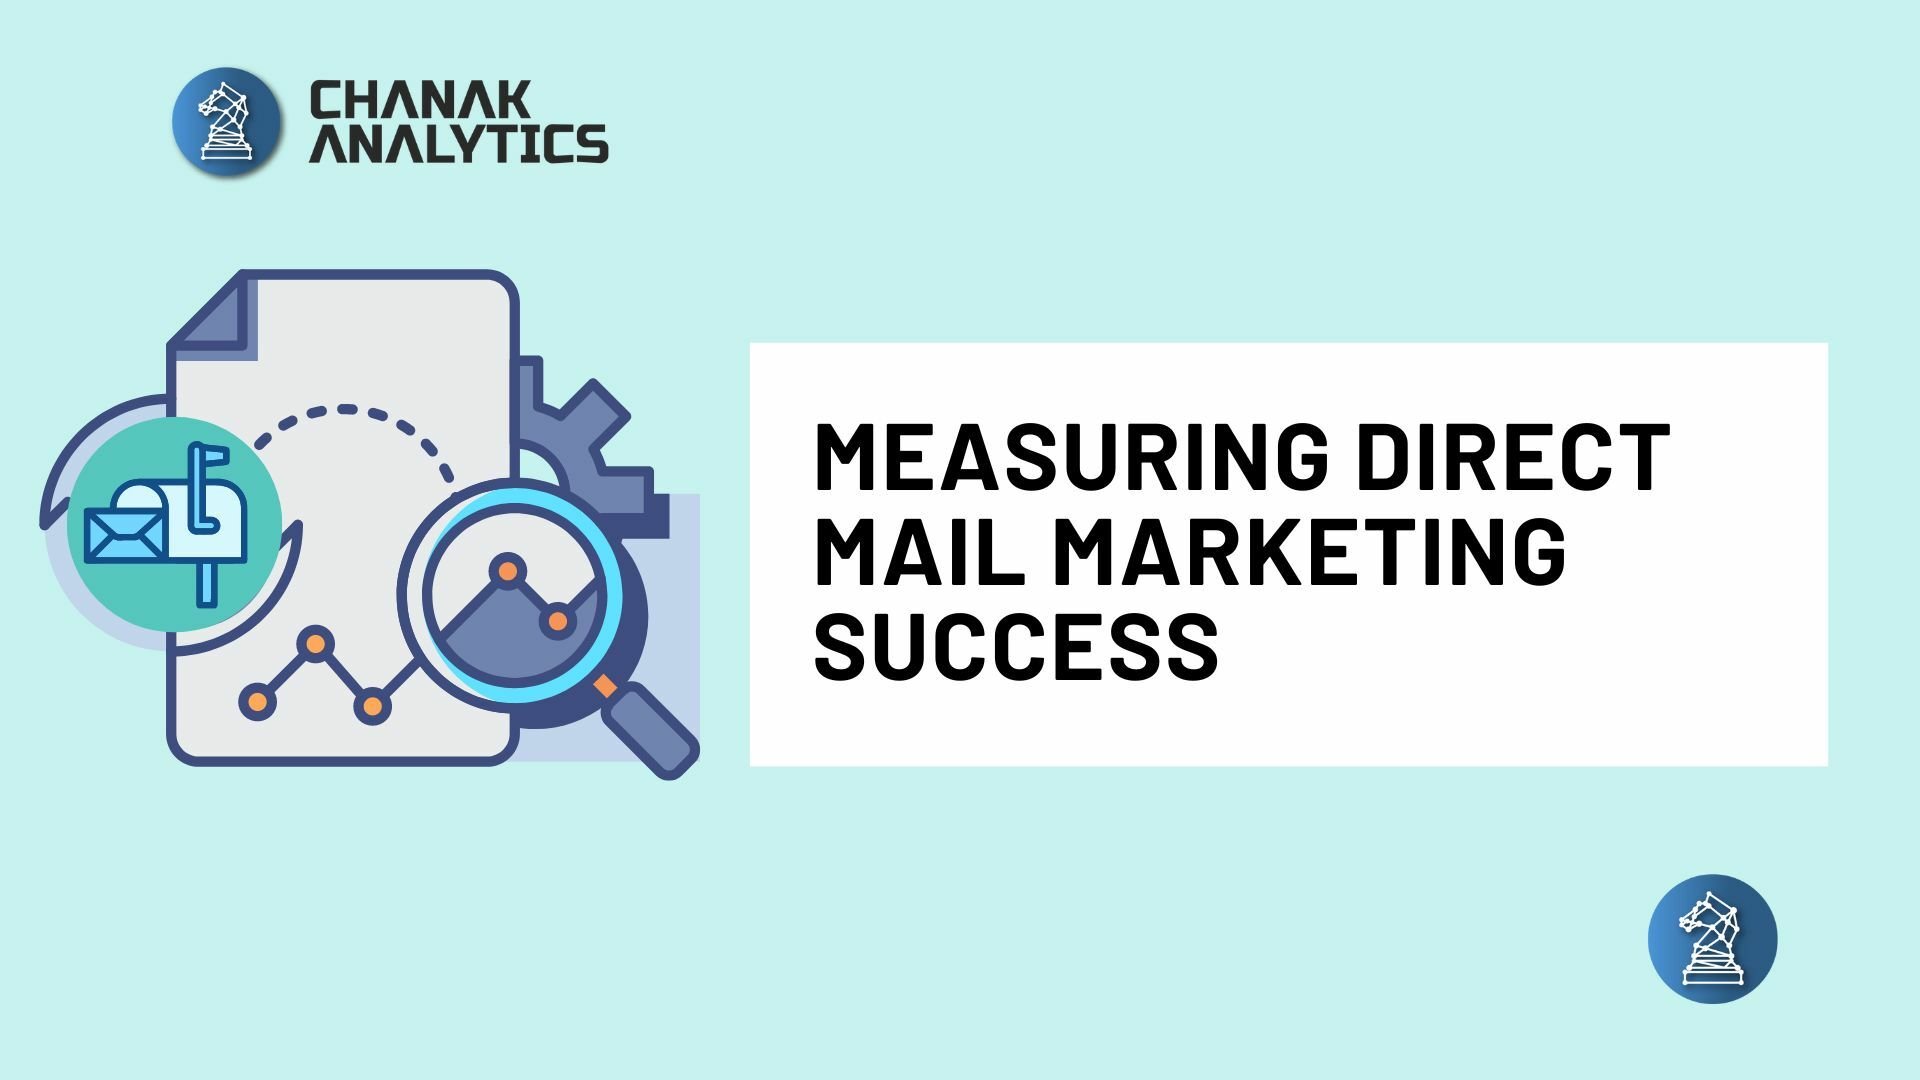 Mail Marketing Success